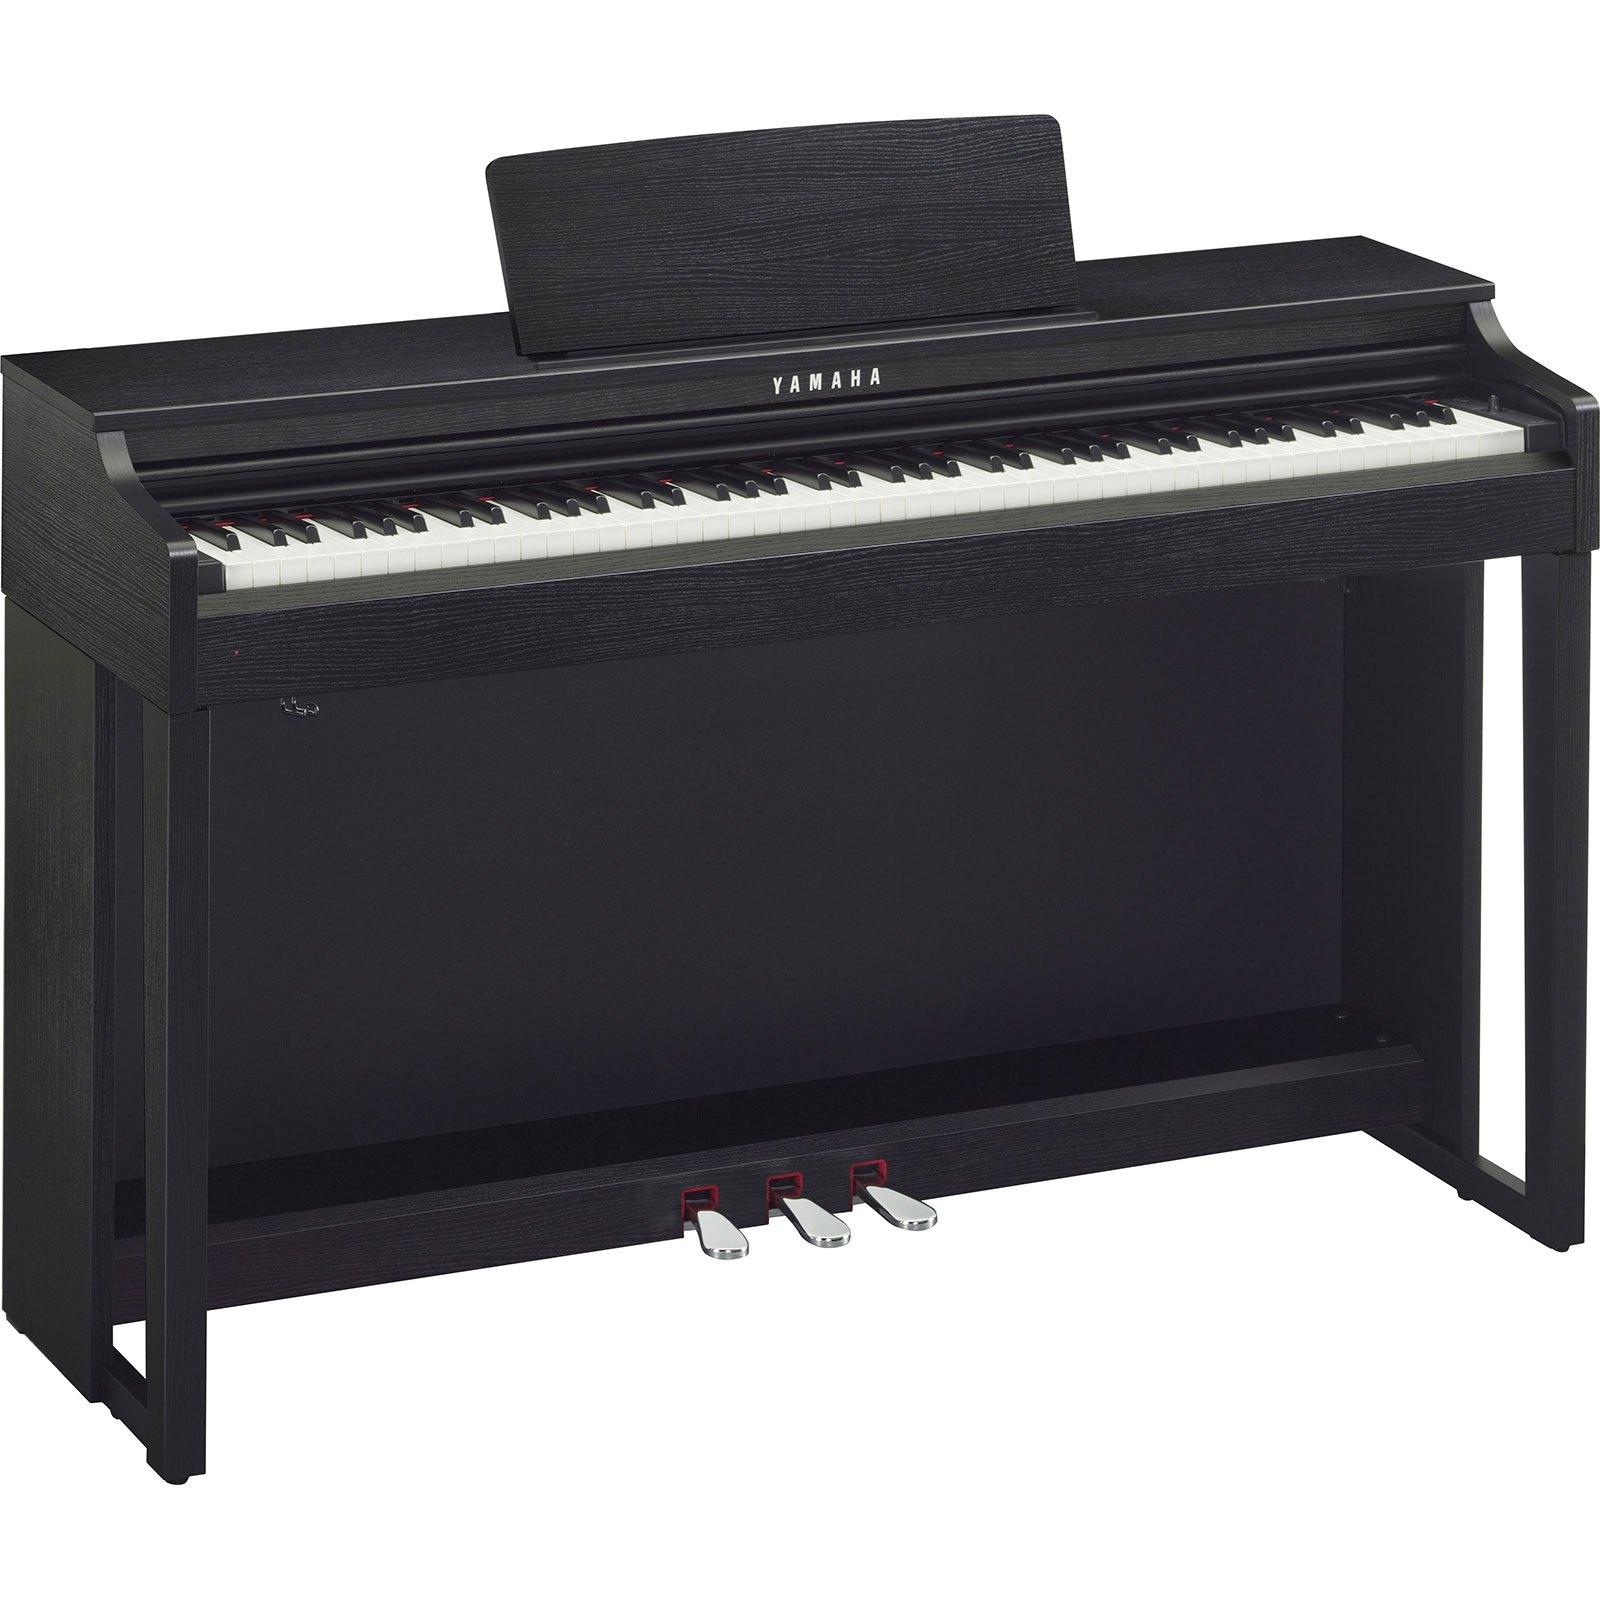 CLP-525 - Features - Clavinova - Pianos - Musical Instruments 